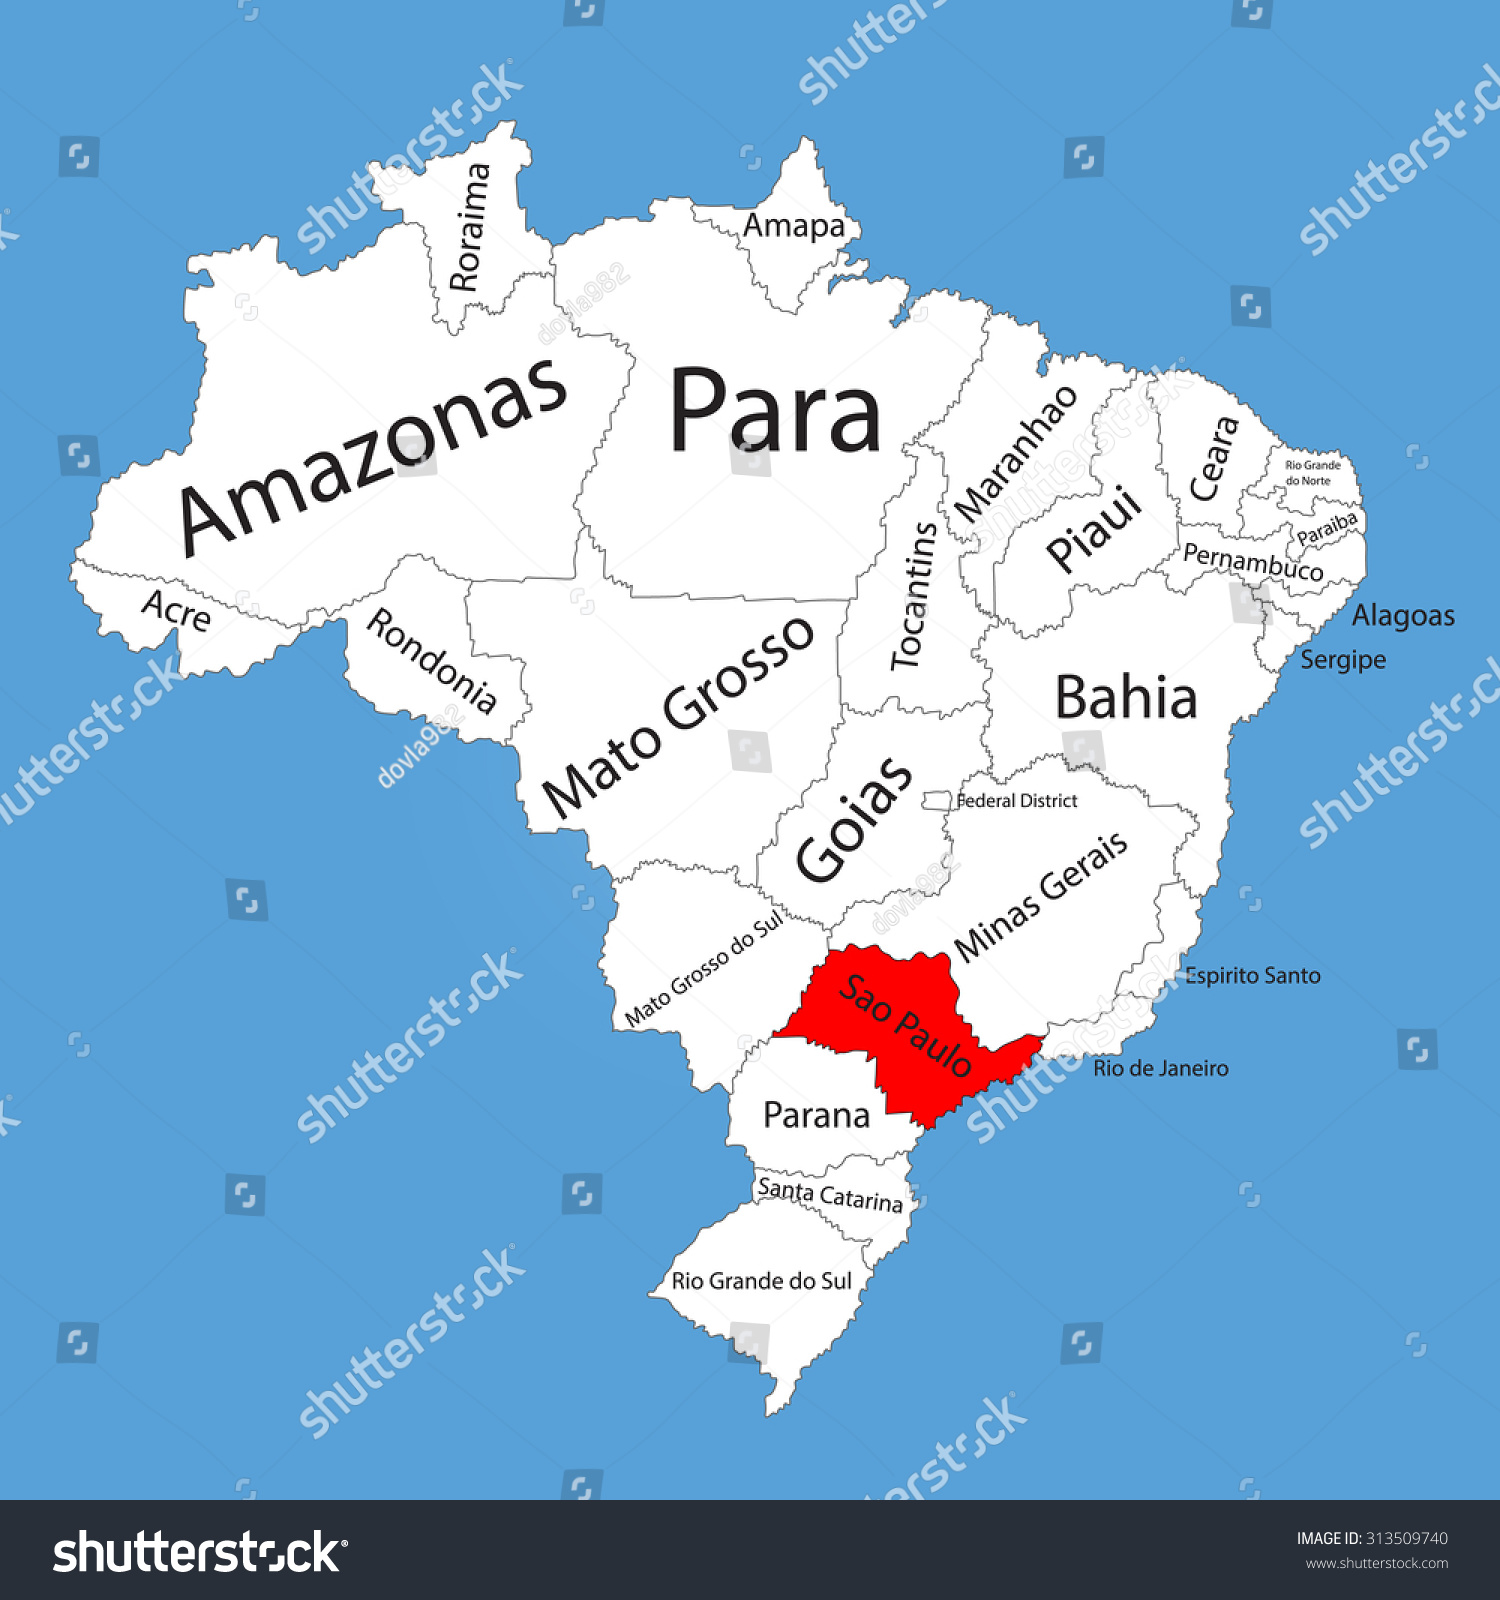 sao paulo brazil map Sao Paulo Brazil Vector Map Isolated Stock Vector Royalty Free sao paulo brazil map